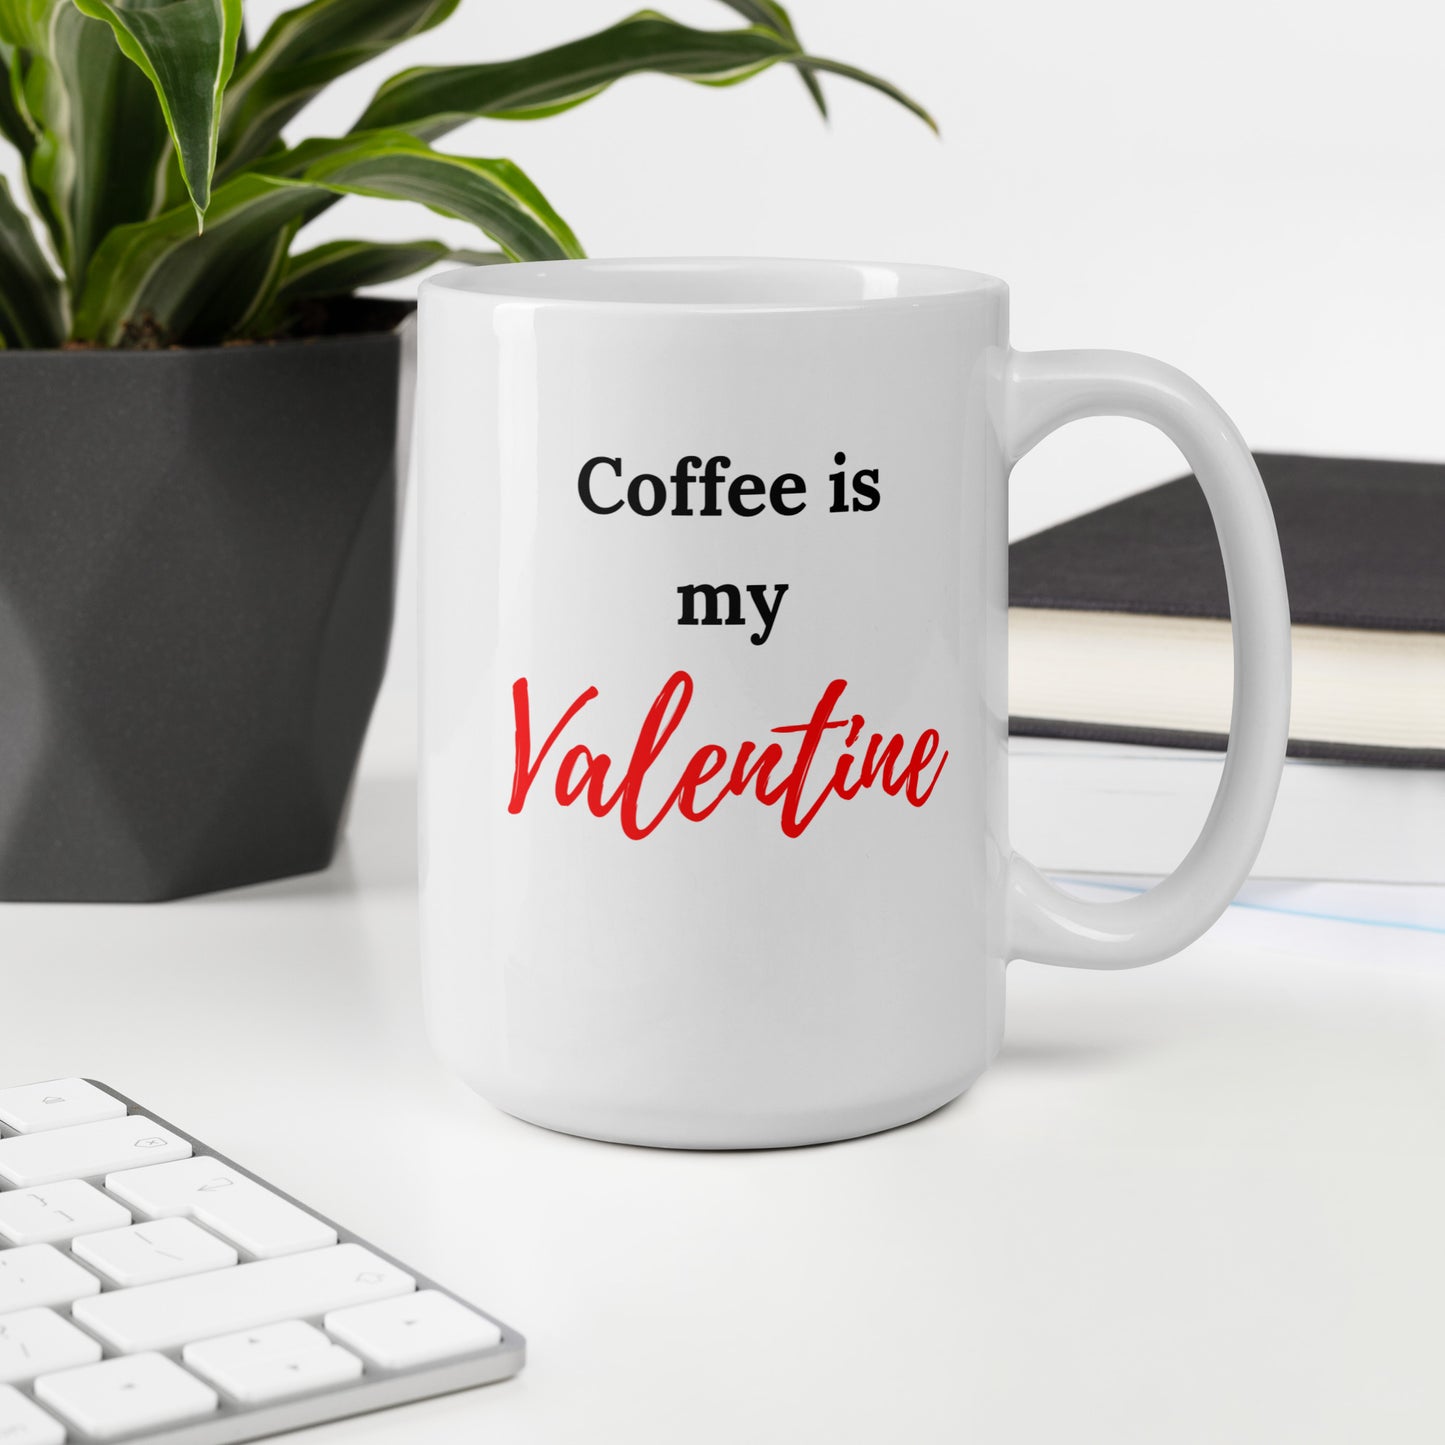 Coffee is My Valentine Coffee Mug, Anti Valentine Gift, Single Valentine Mug, Funny Valentine, Funny Valentine Gift, Anti Valentine's Day